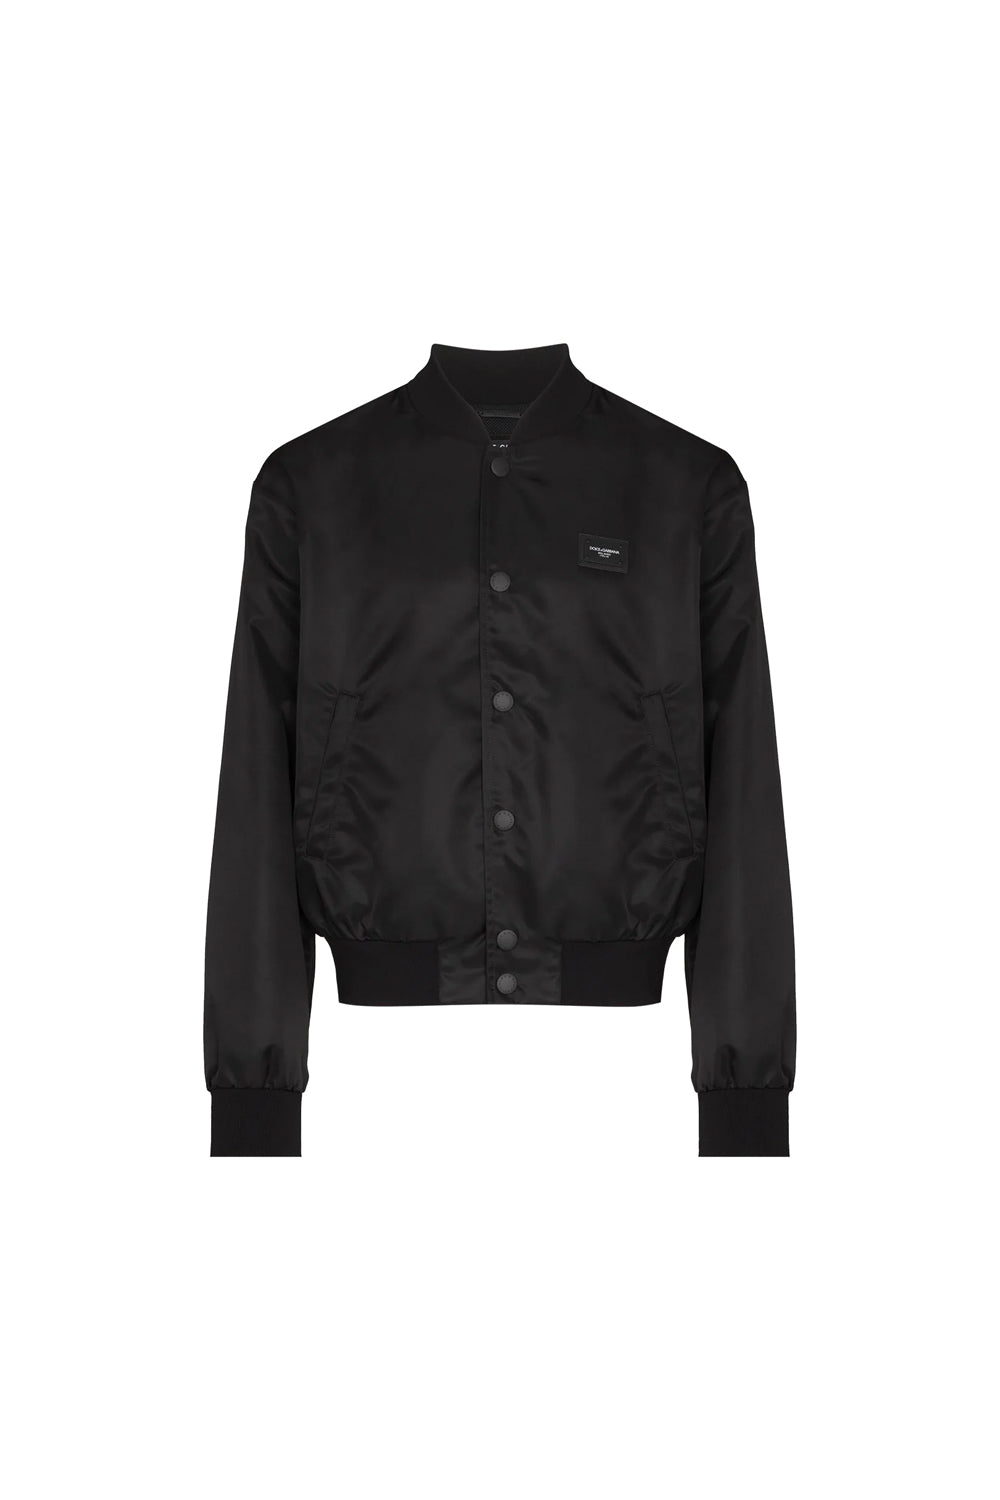 Dolce & Gabbana DG-plaque bomber jacket